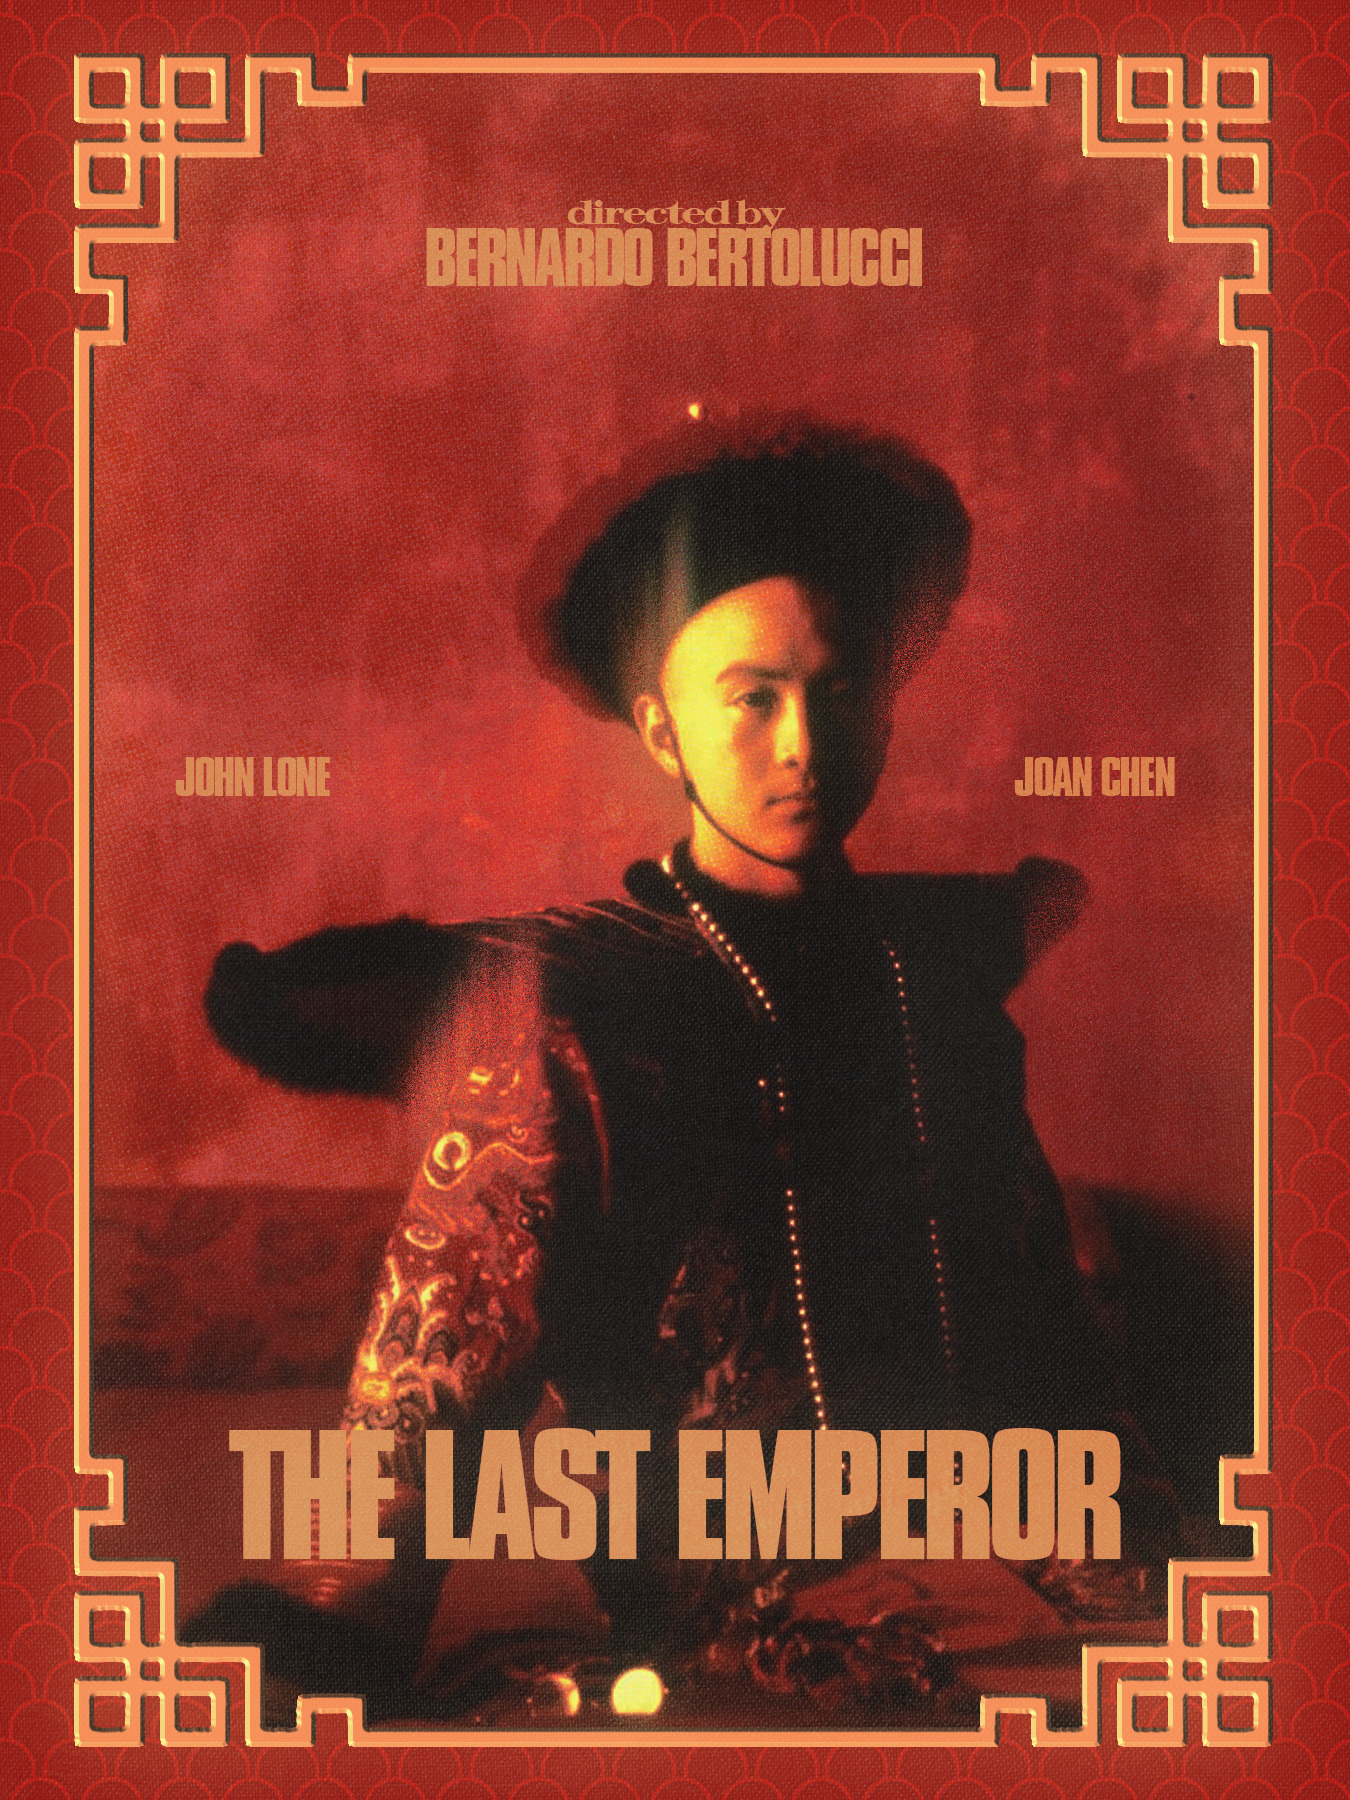 The Last Emperor – Concept Poster